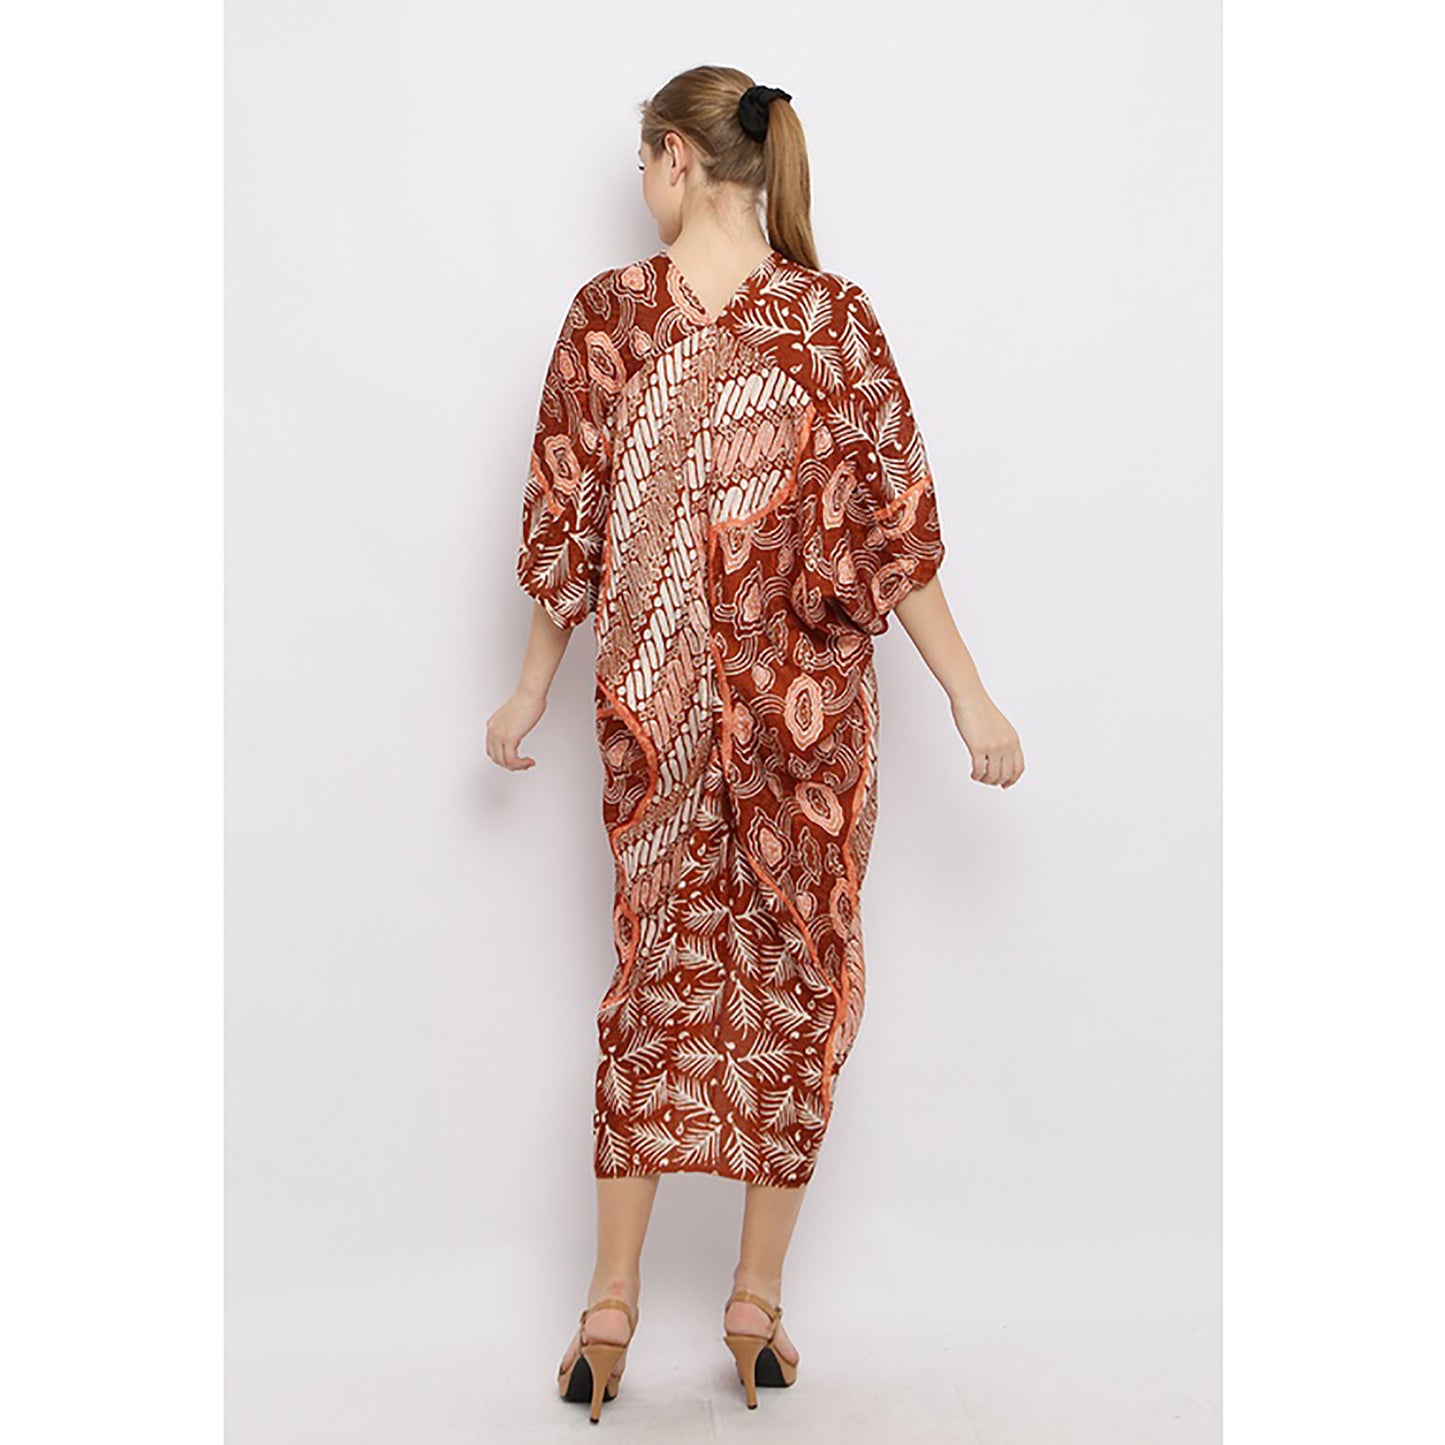 Alina Orange Exquisite Batik Etniq Craft Kaftan in Viscose, Batik Dress, Caftan Dress, Ethnic Dress, Midi Dress